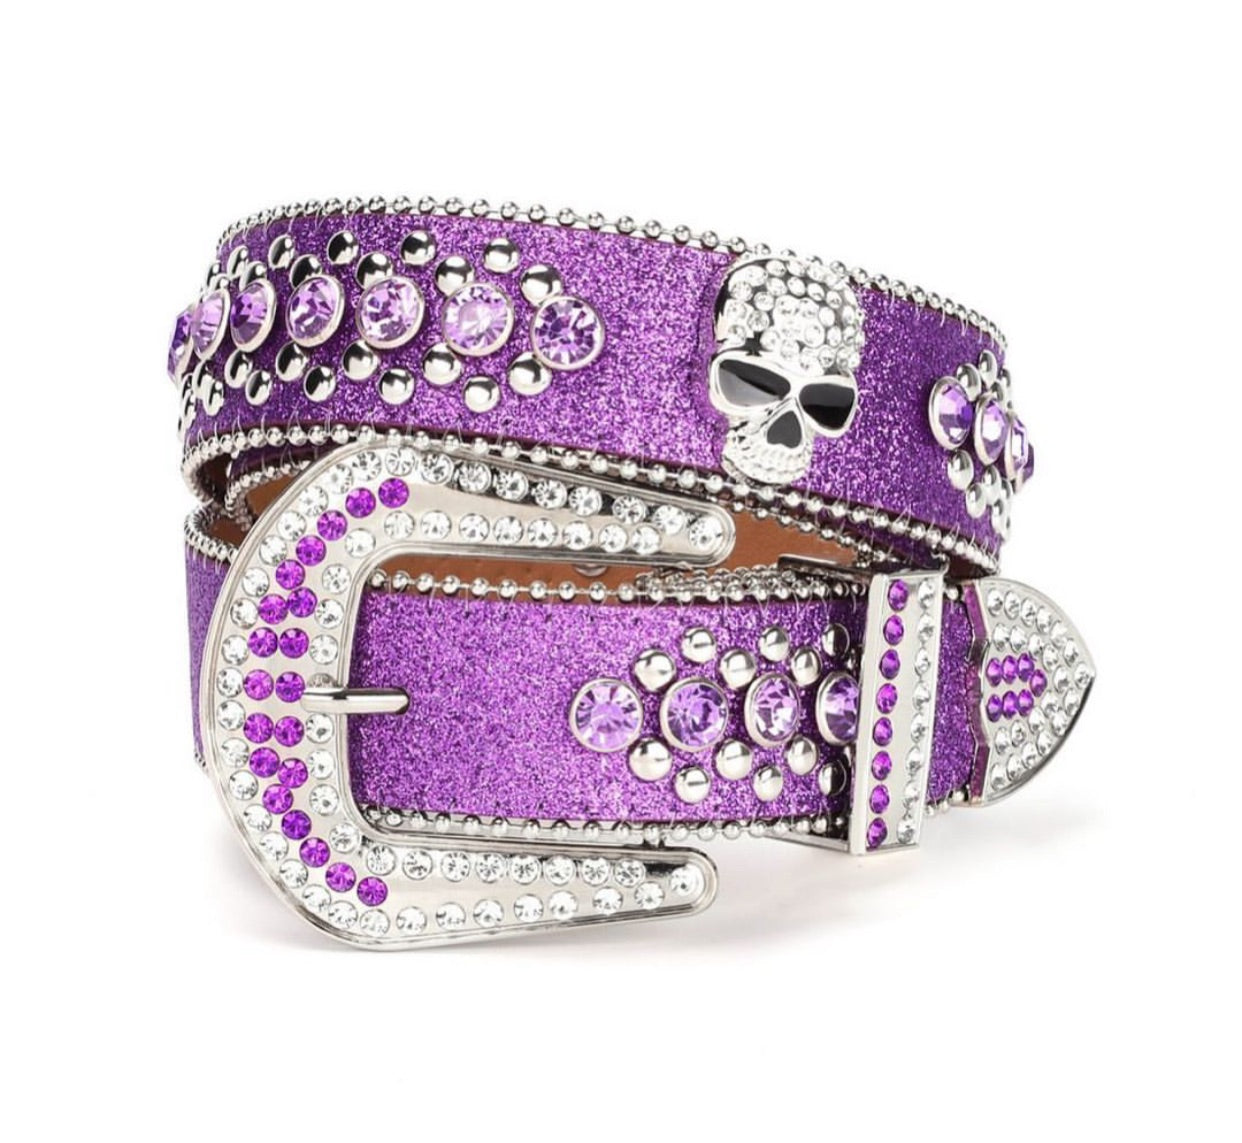 Rhinestone skull belt in purple 8303